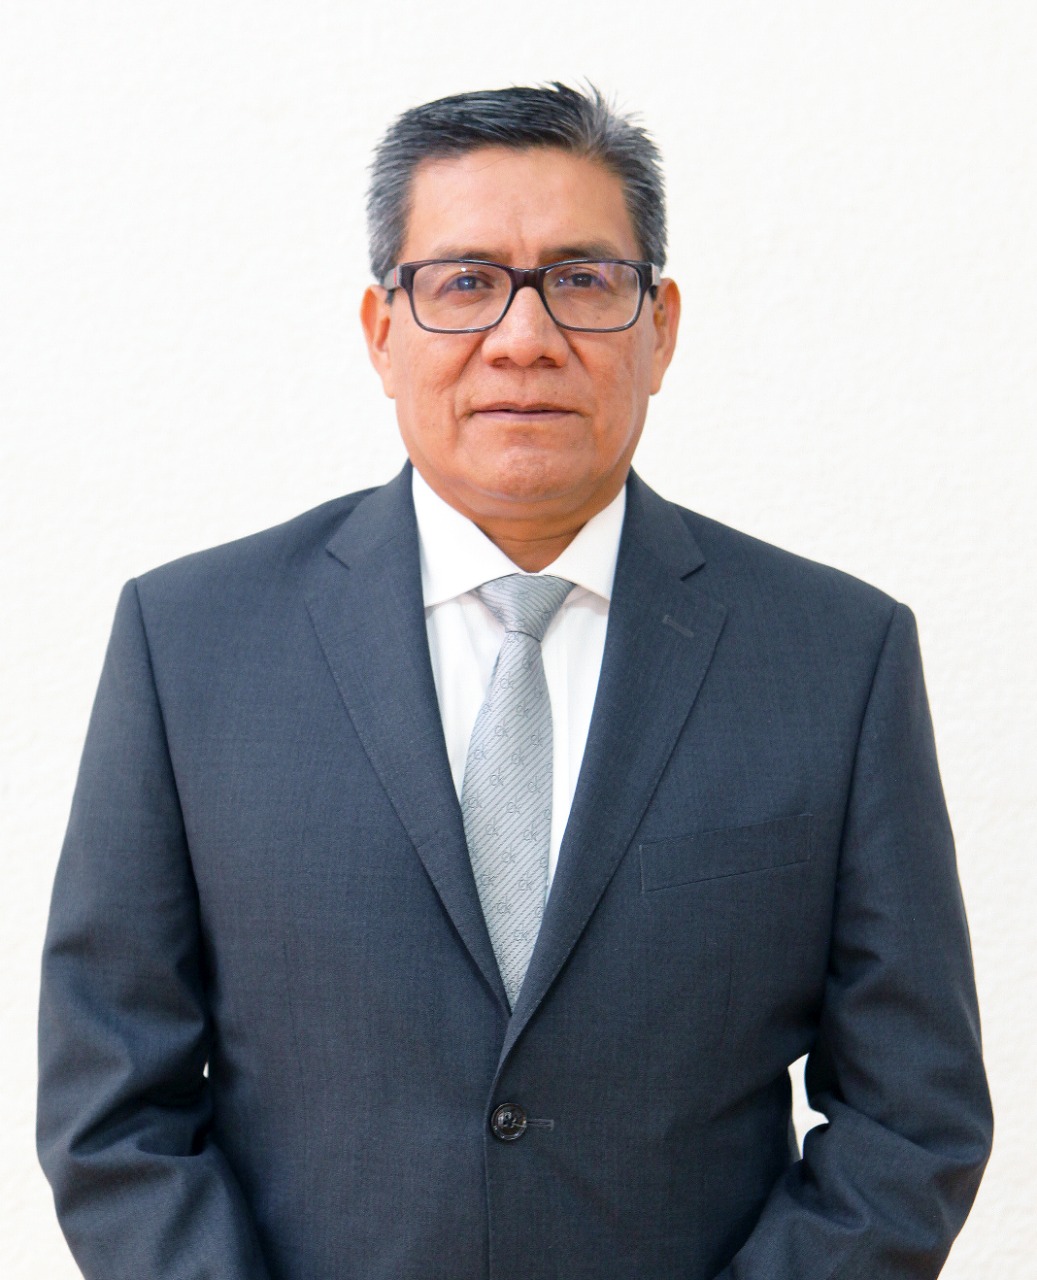 Dr. Teodoro Vargas Ponce